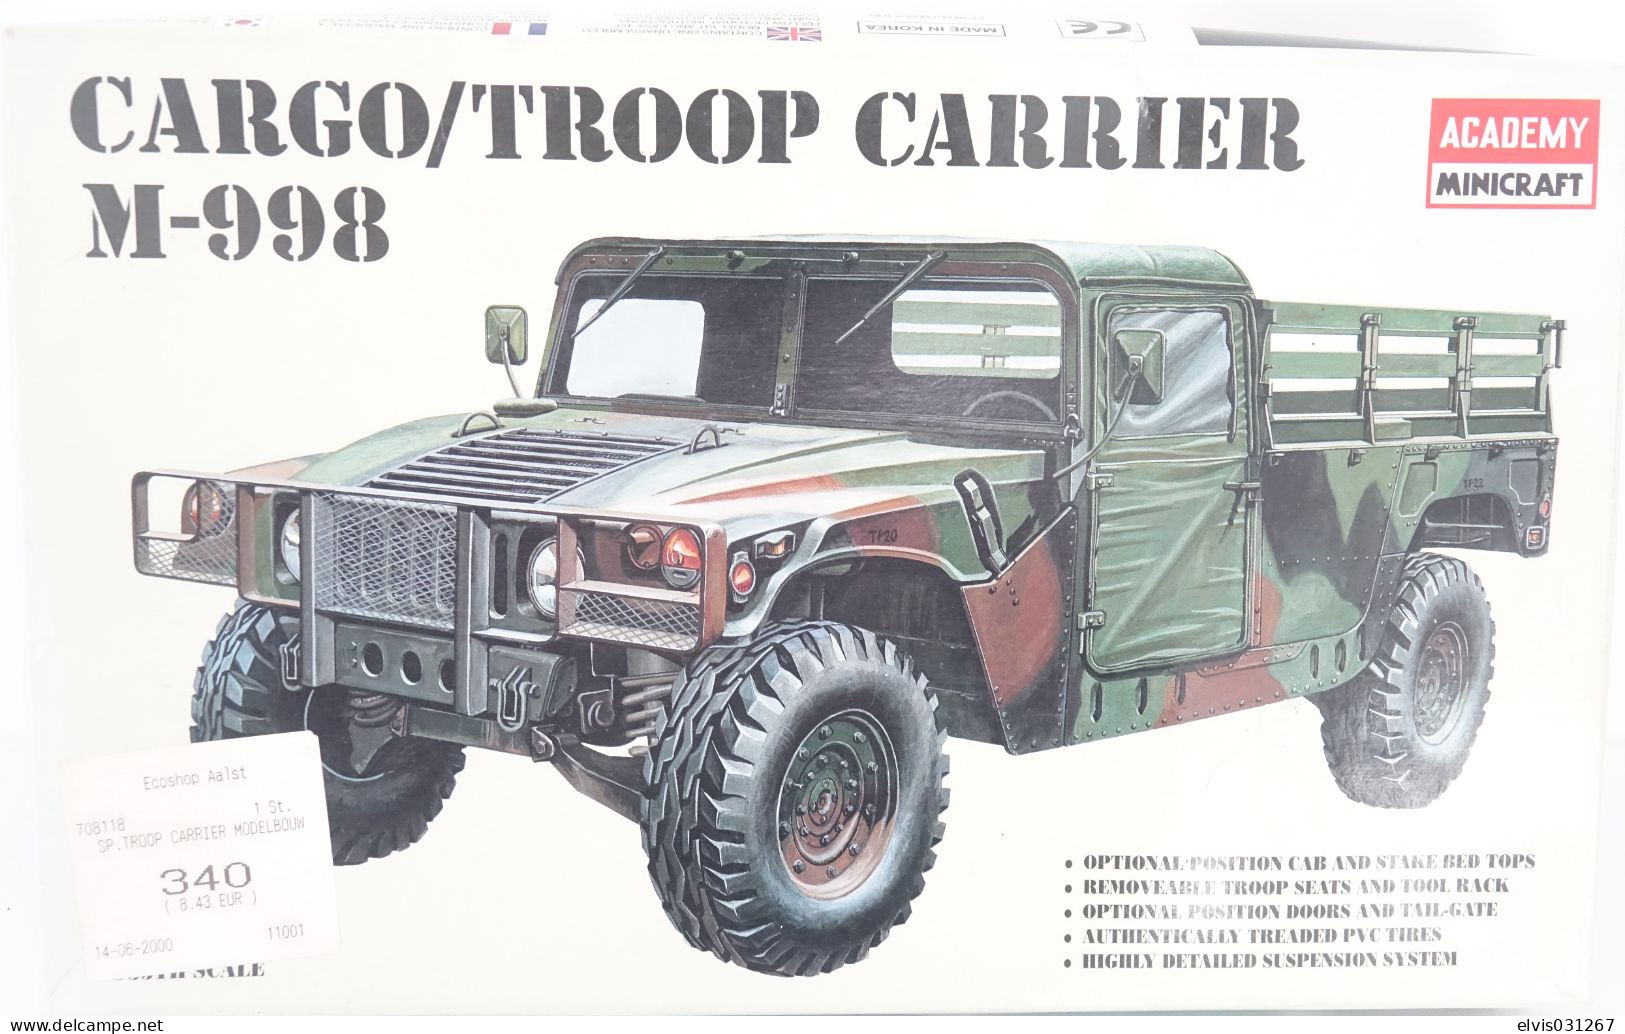 Model Kit - ACADEMY - Cargo Troop Carrier M-998, Scale 1/35, + Original Box - Vehículos Militares